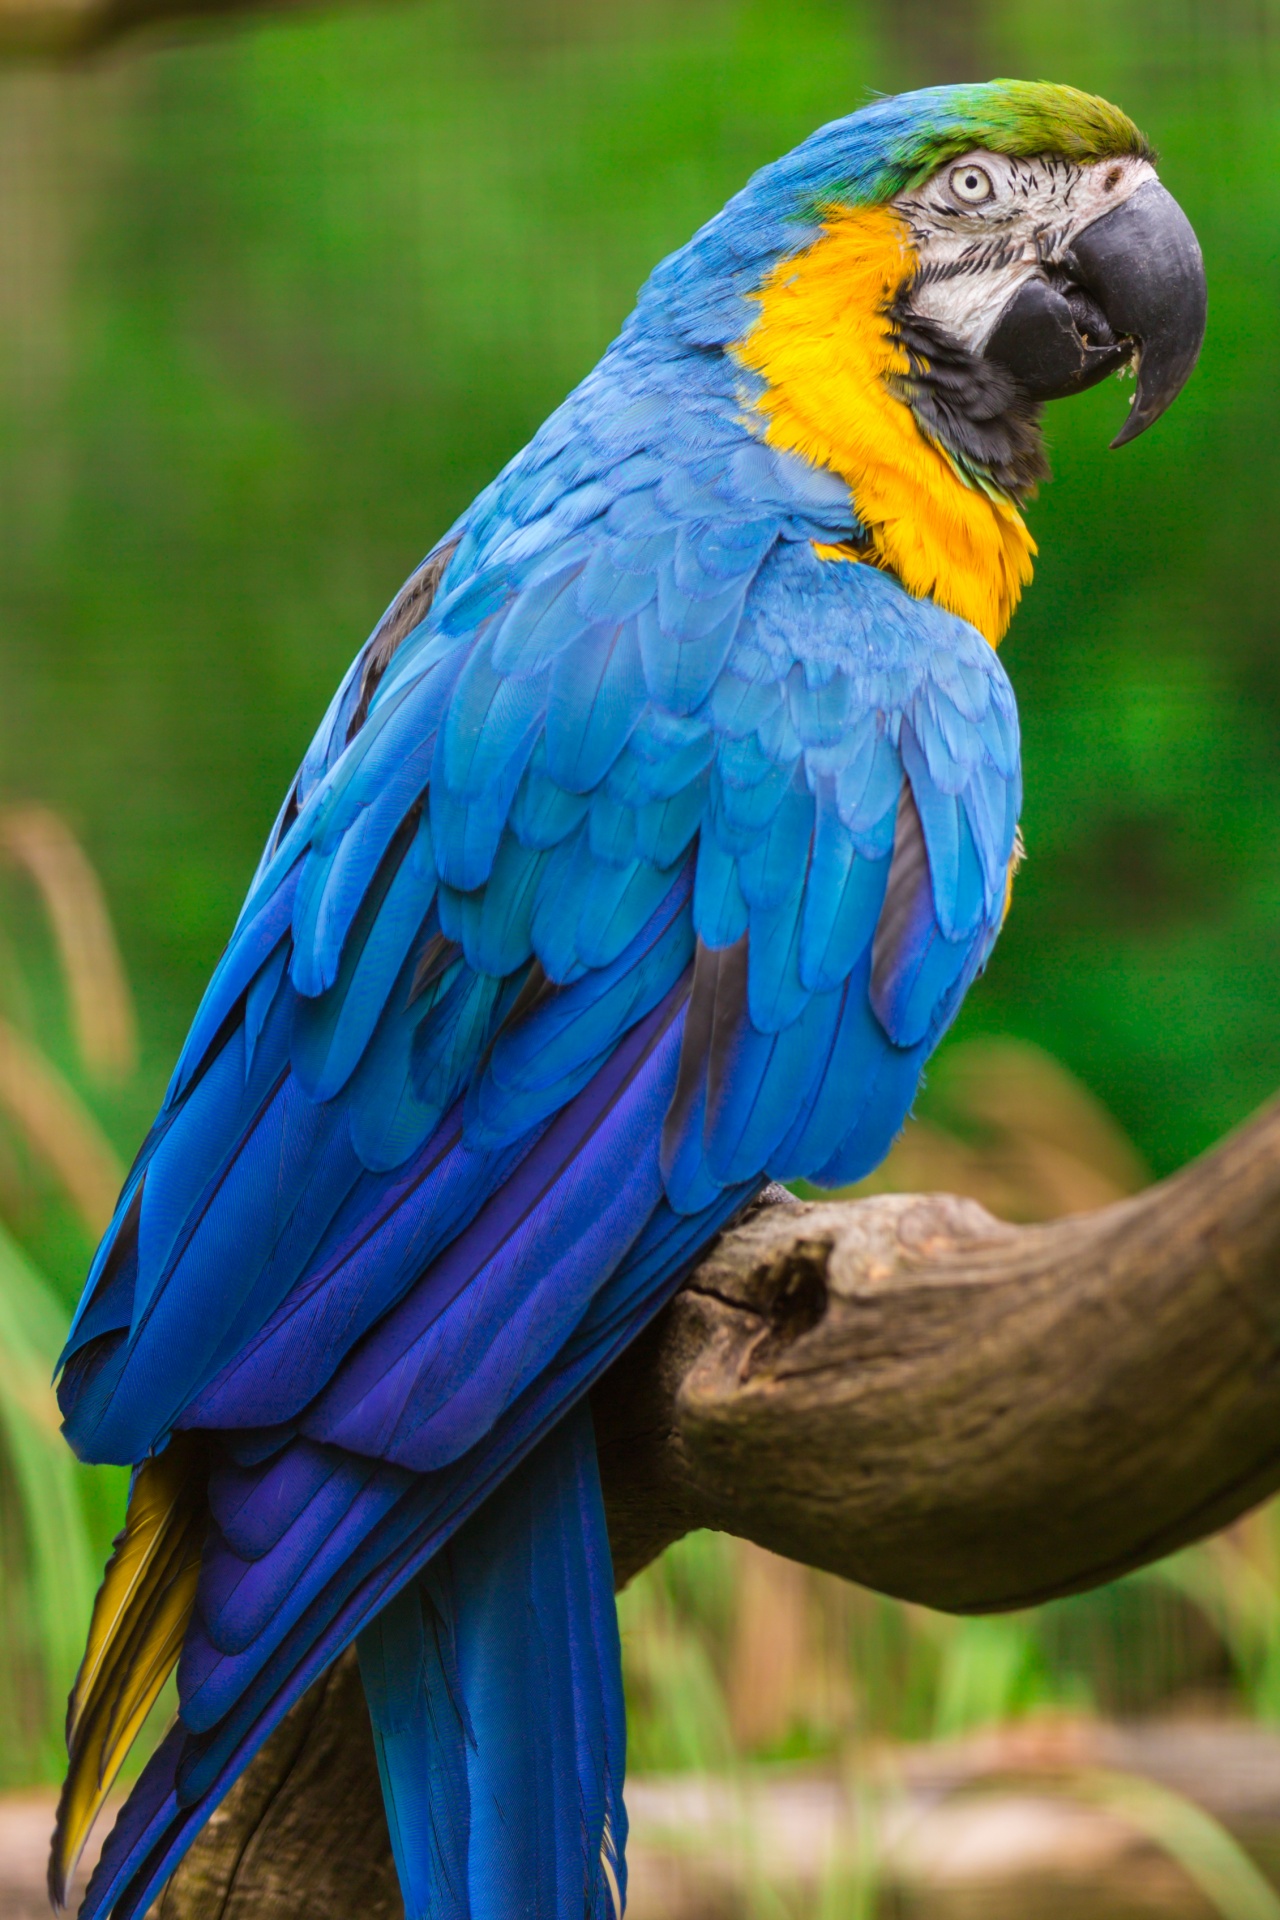 Blue and yellow macaw bird portrait